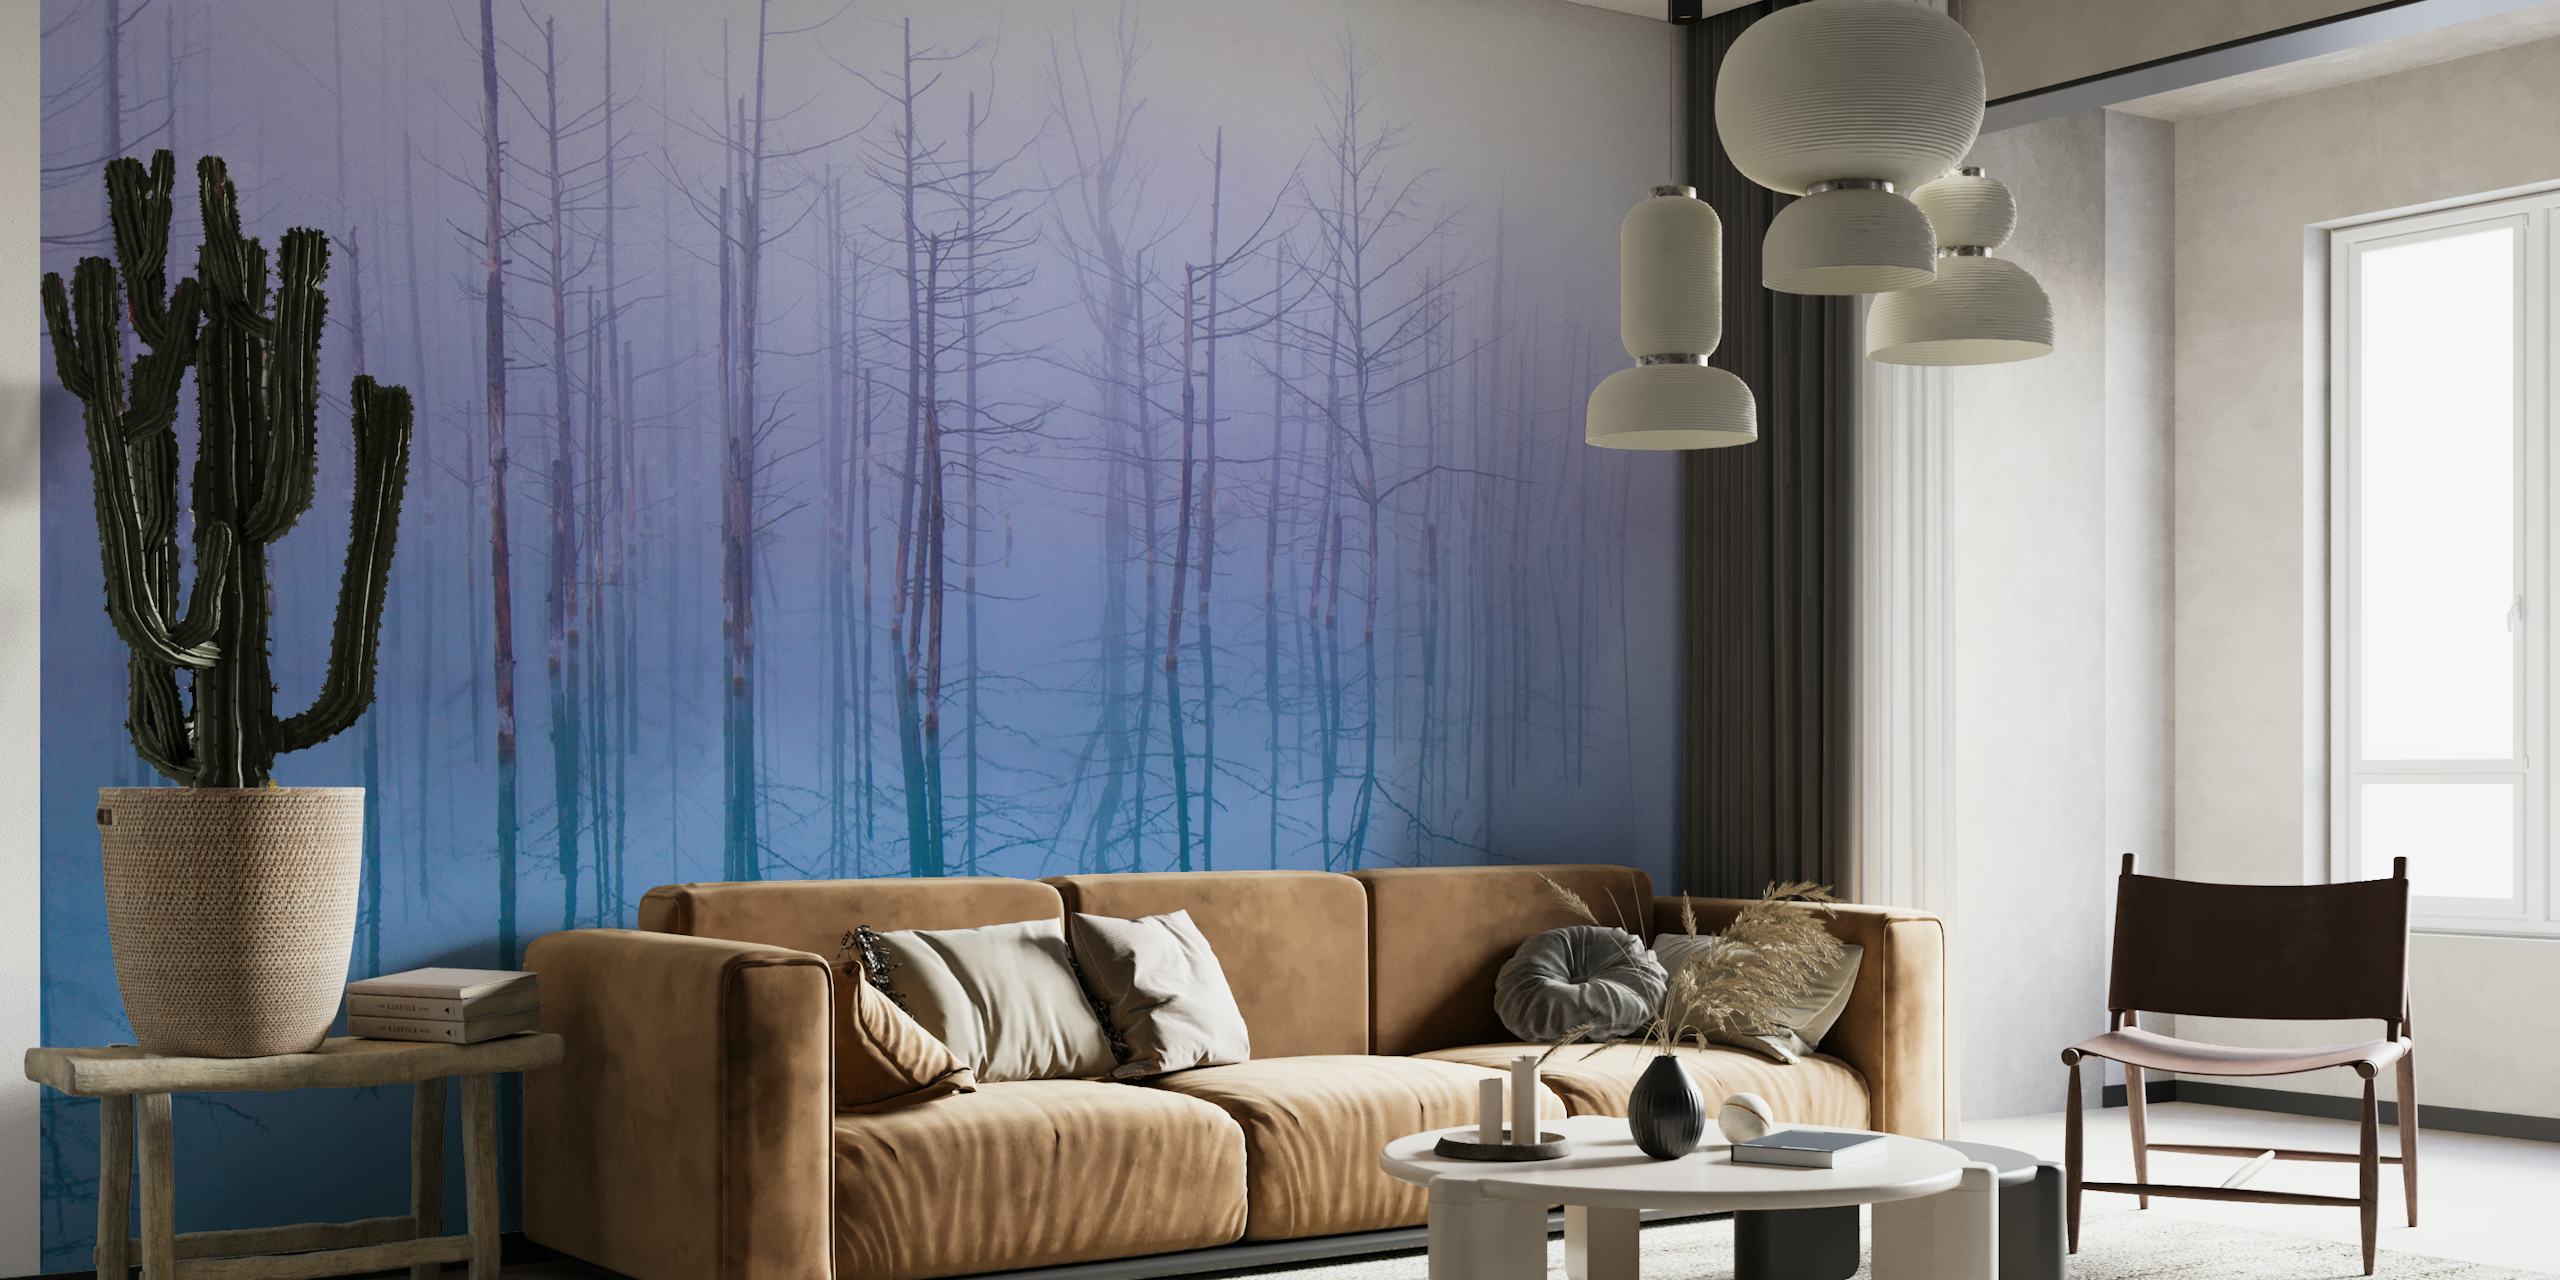 Misty Blue Pond wallpaper